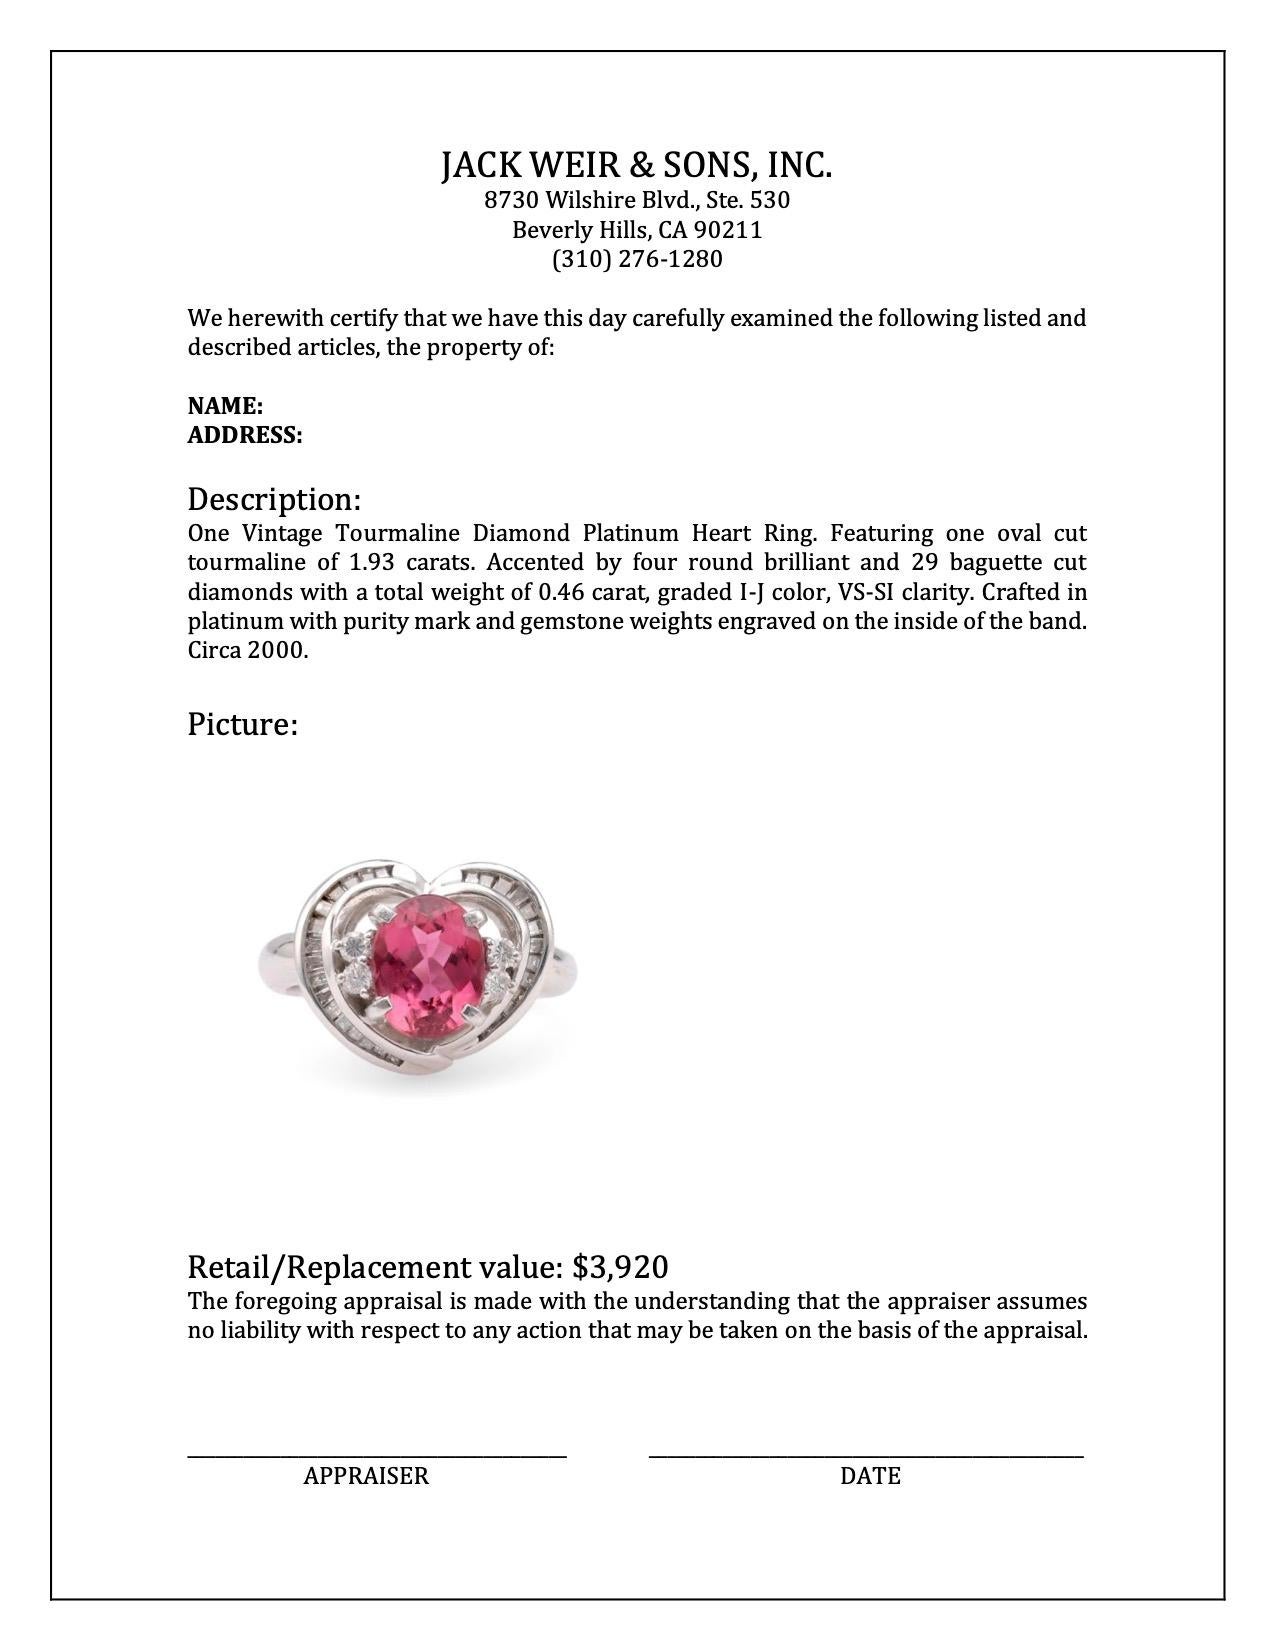 Women's or Men's Vintage Tourmaline Diamond Platinum Heart Ring For Sale